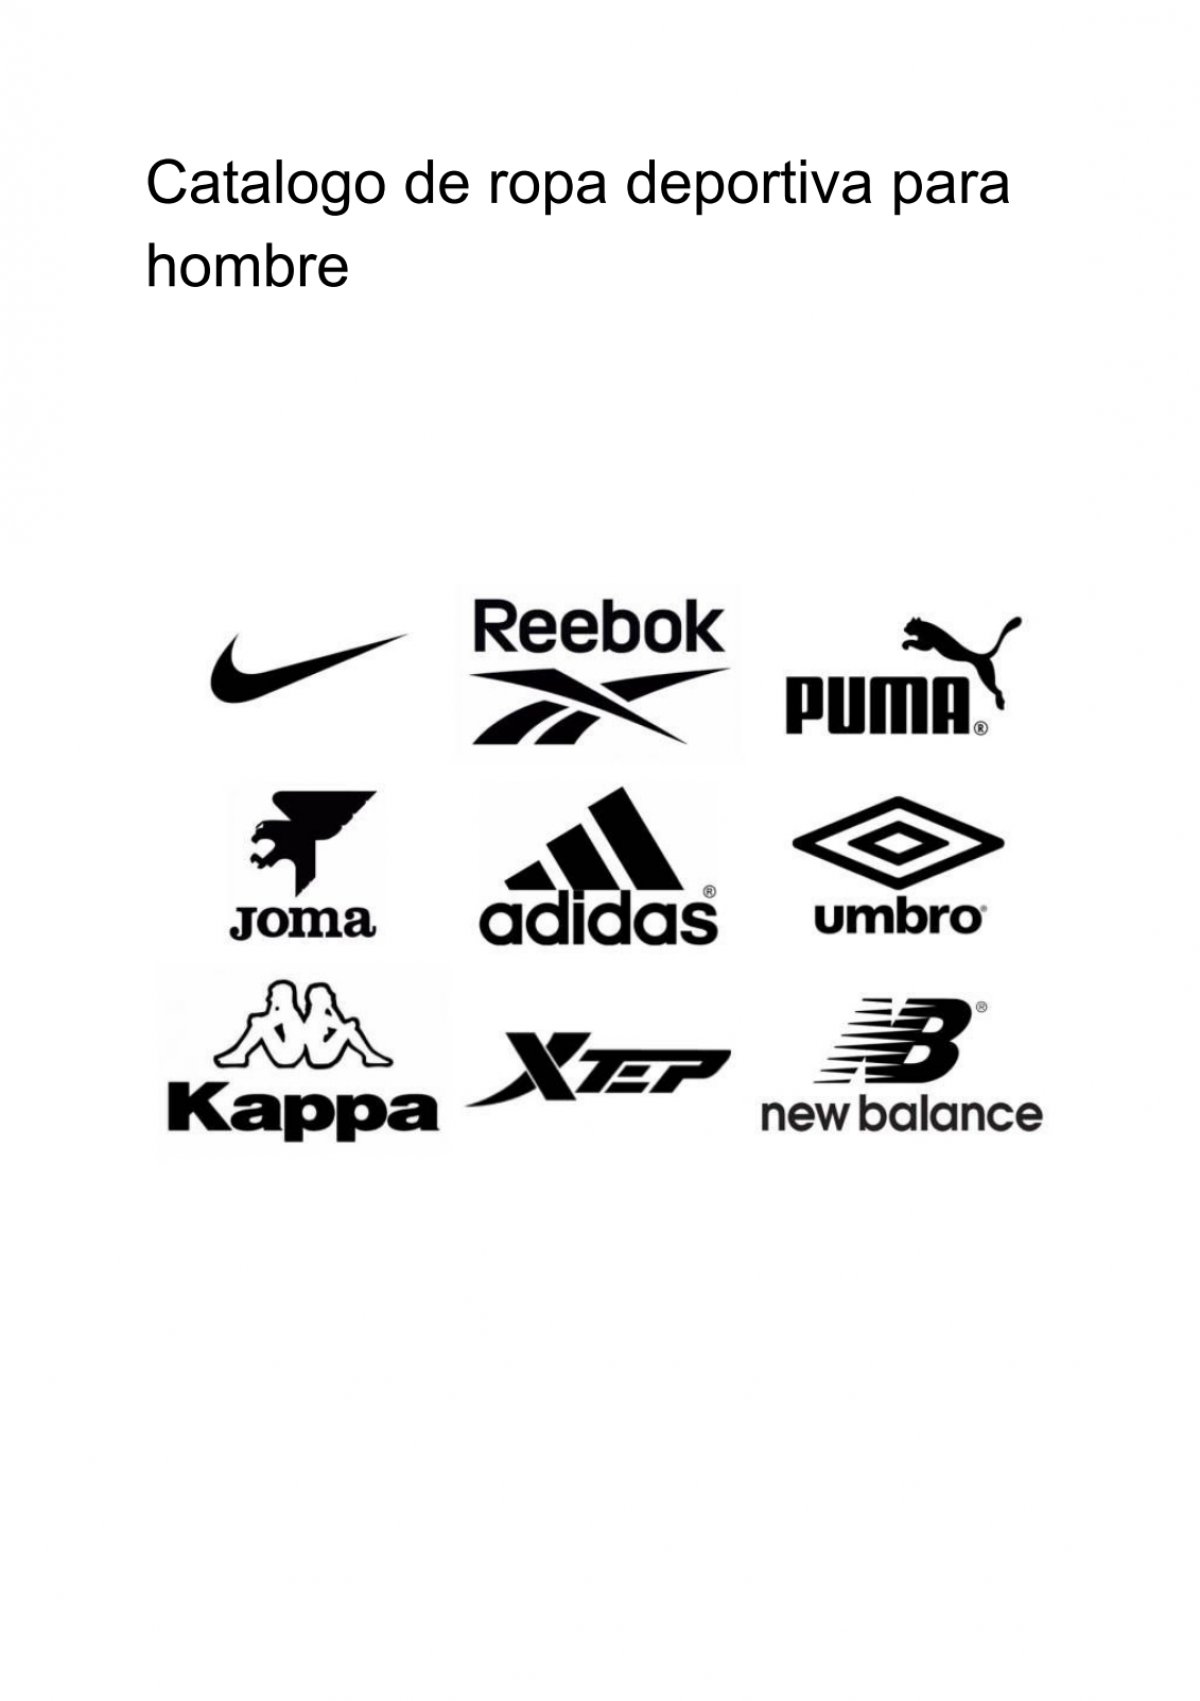 Catalogo de ropa deportiva hombre